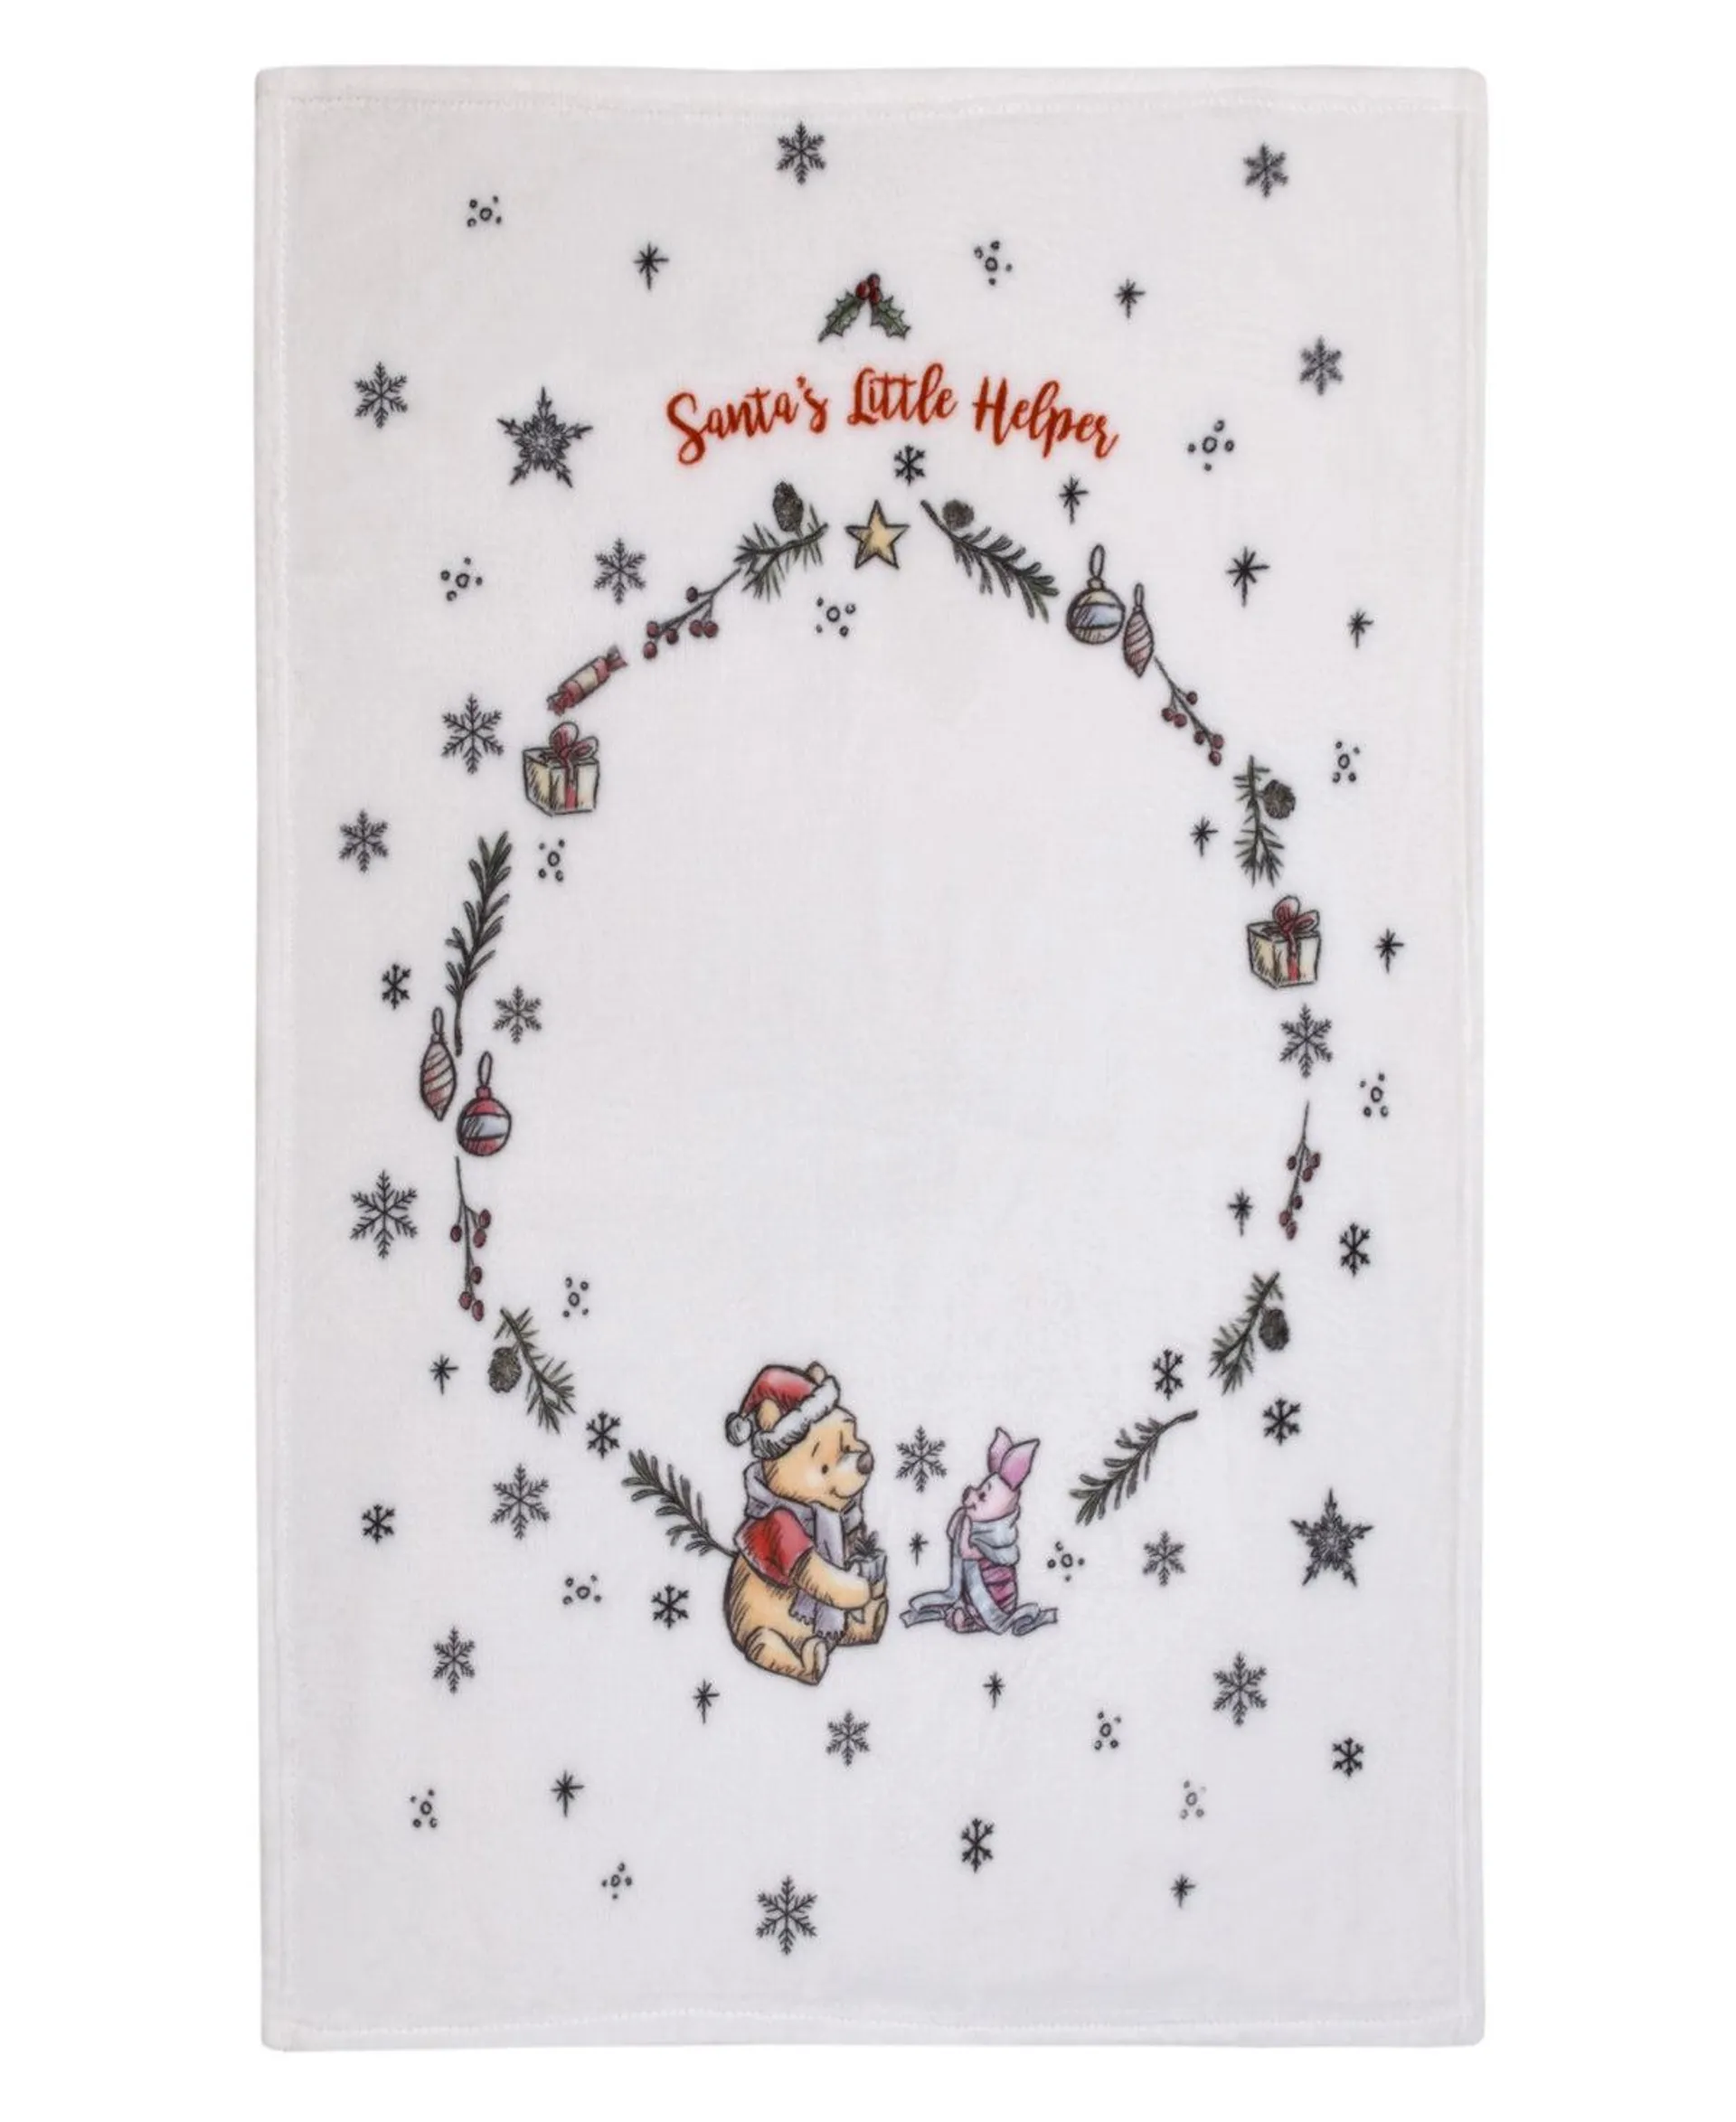 Disney Winnie the Pooh and Piglet Christmas Holiday Wreath "Santa's Little Helper" Super Soft Baby Blanket